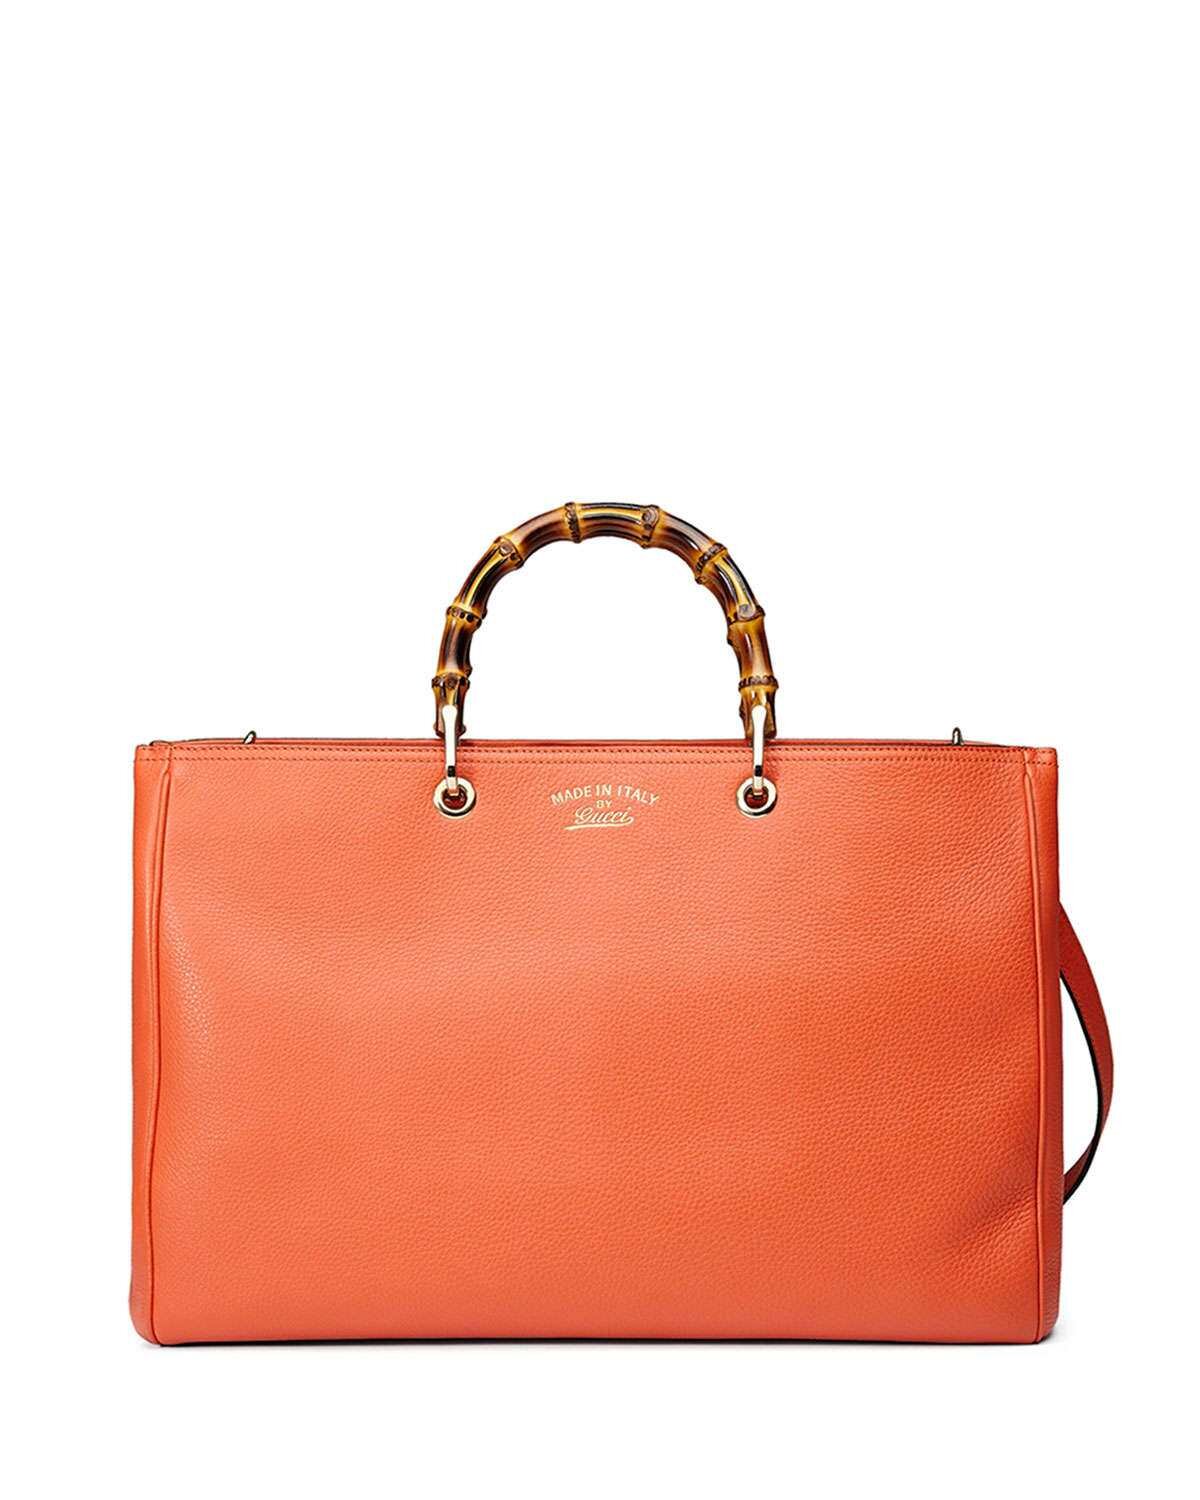 Gucci Bamboo Shopper Tote Bag in Dark Orange.jpg